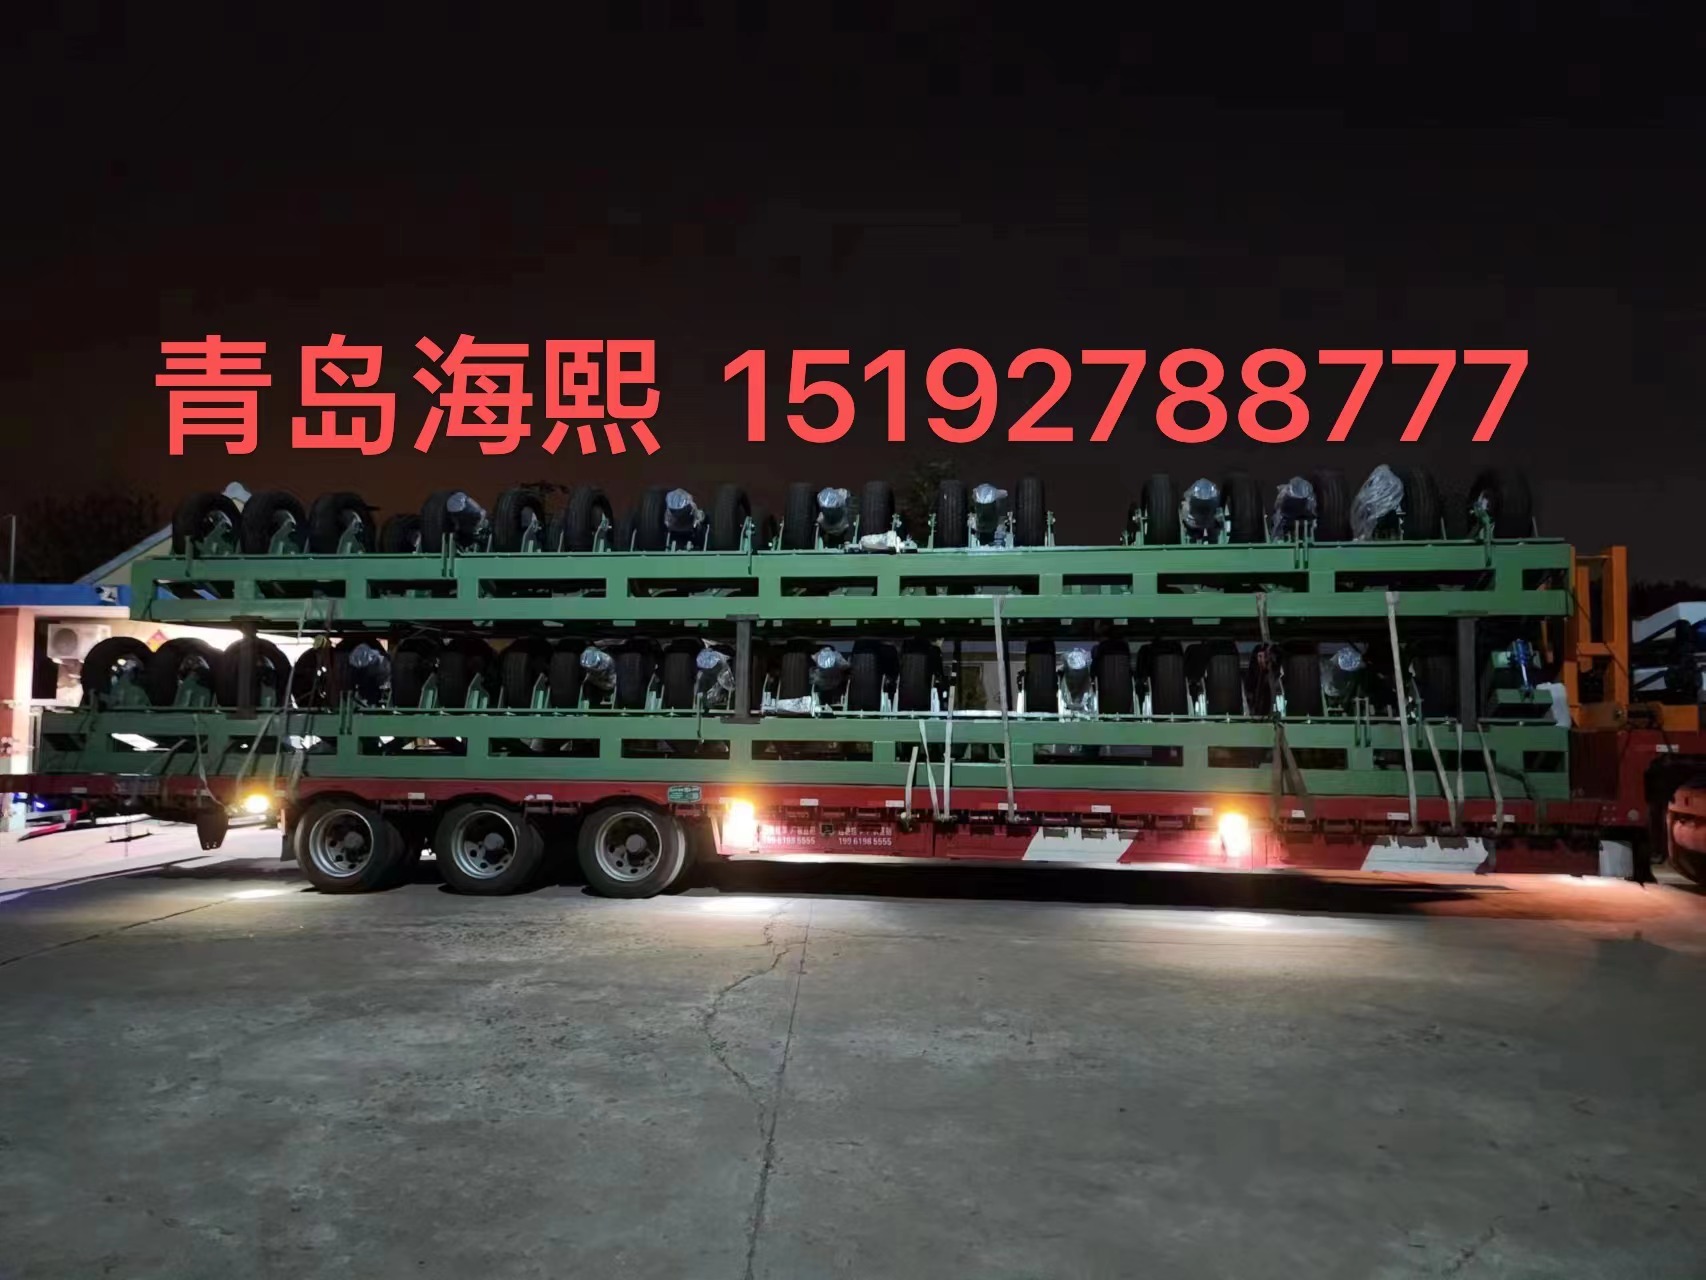 Hebei Huadun pipe manufacturing Co., Ltd. second c